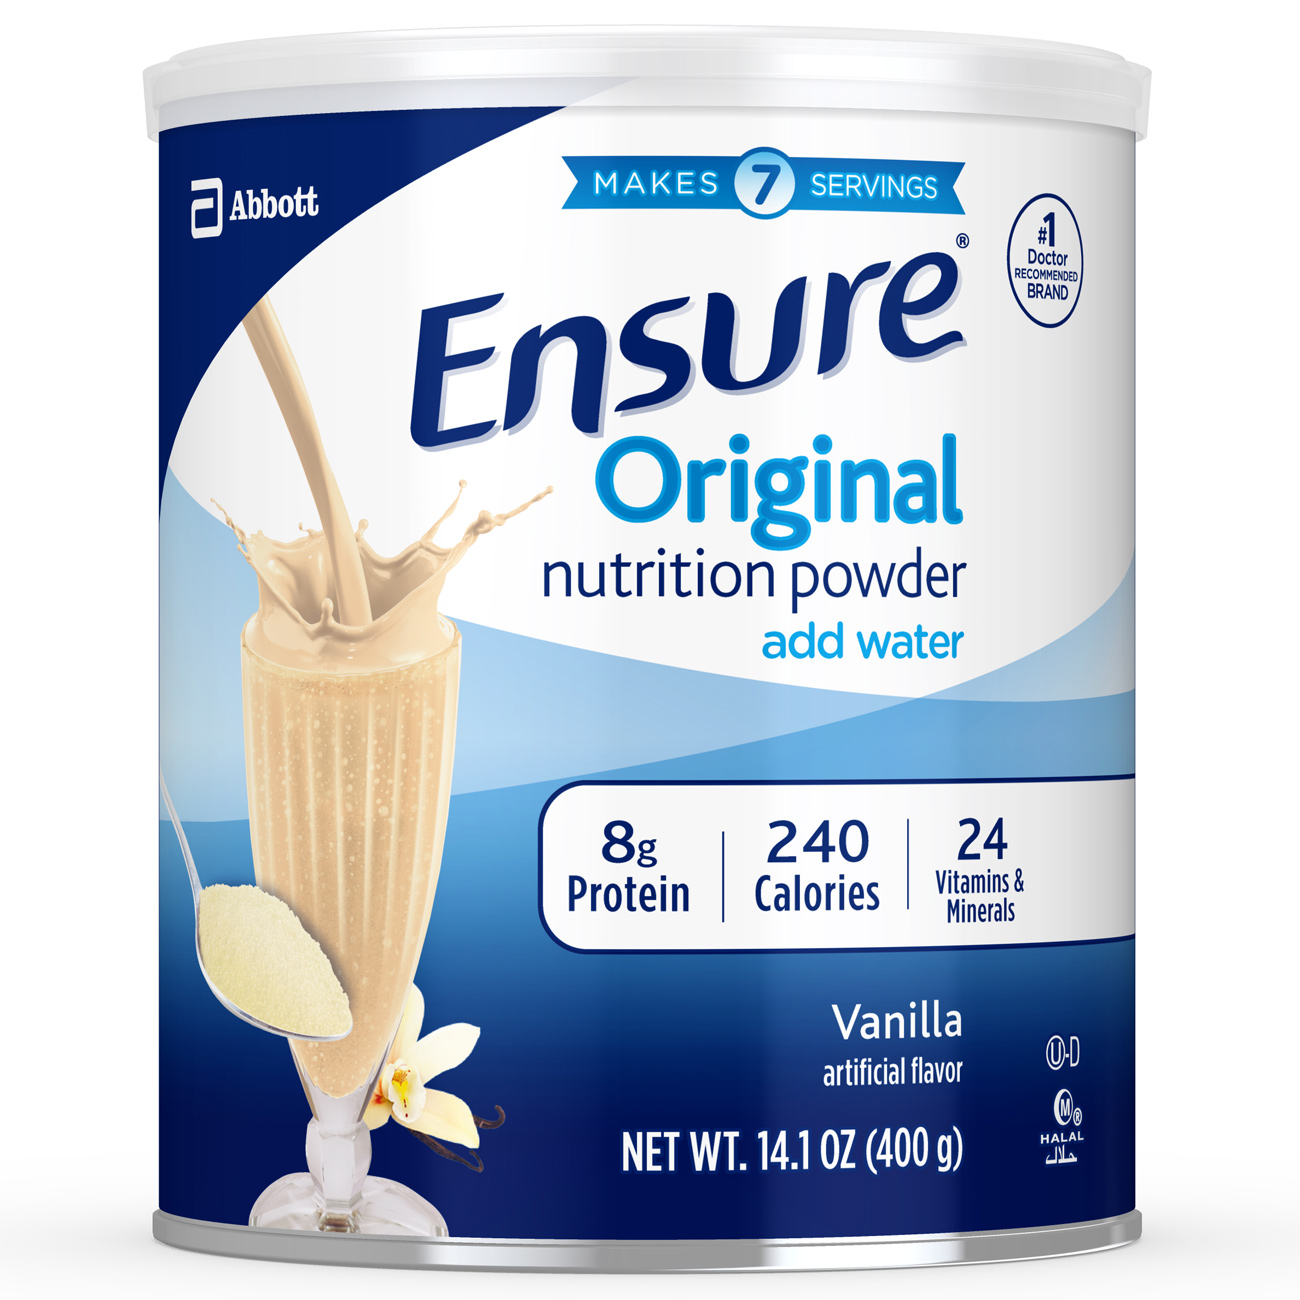 Sữa Bột Ensure Original Nutrition Powder hộp 397g Mỹ